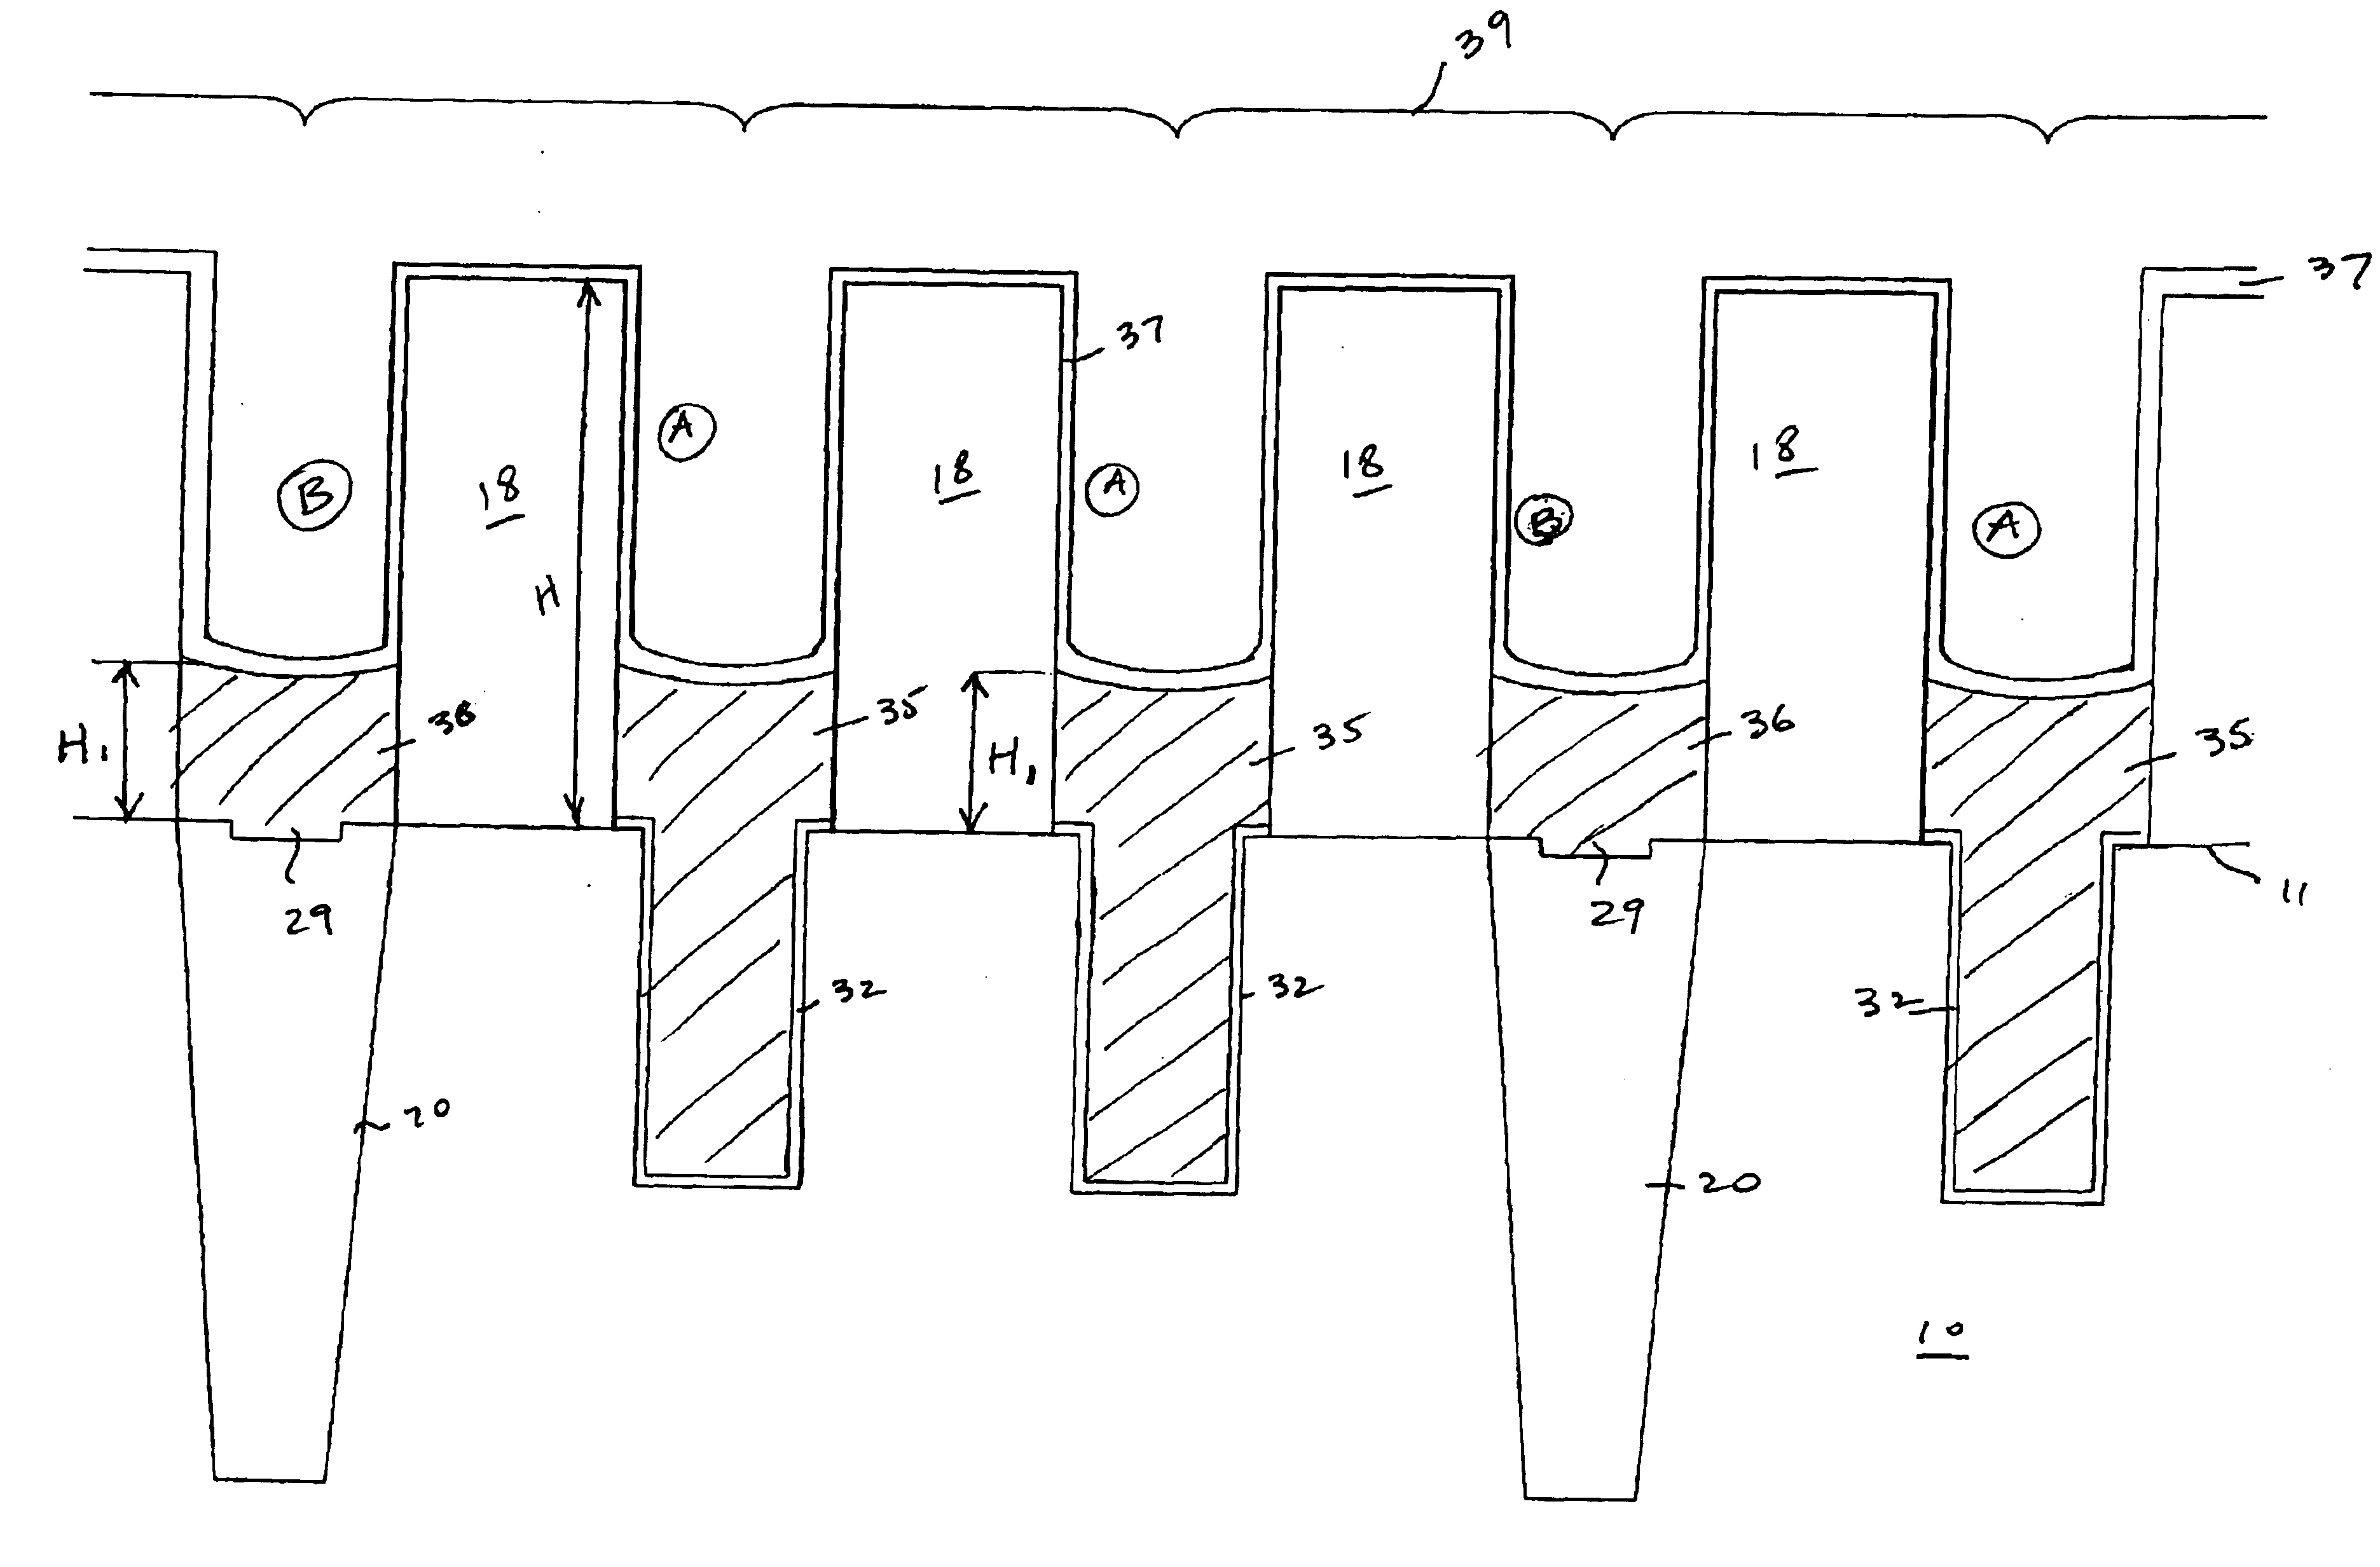 Method of forming DRAM access transistors